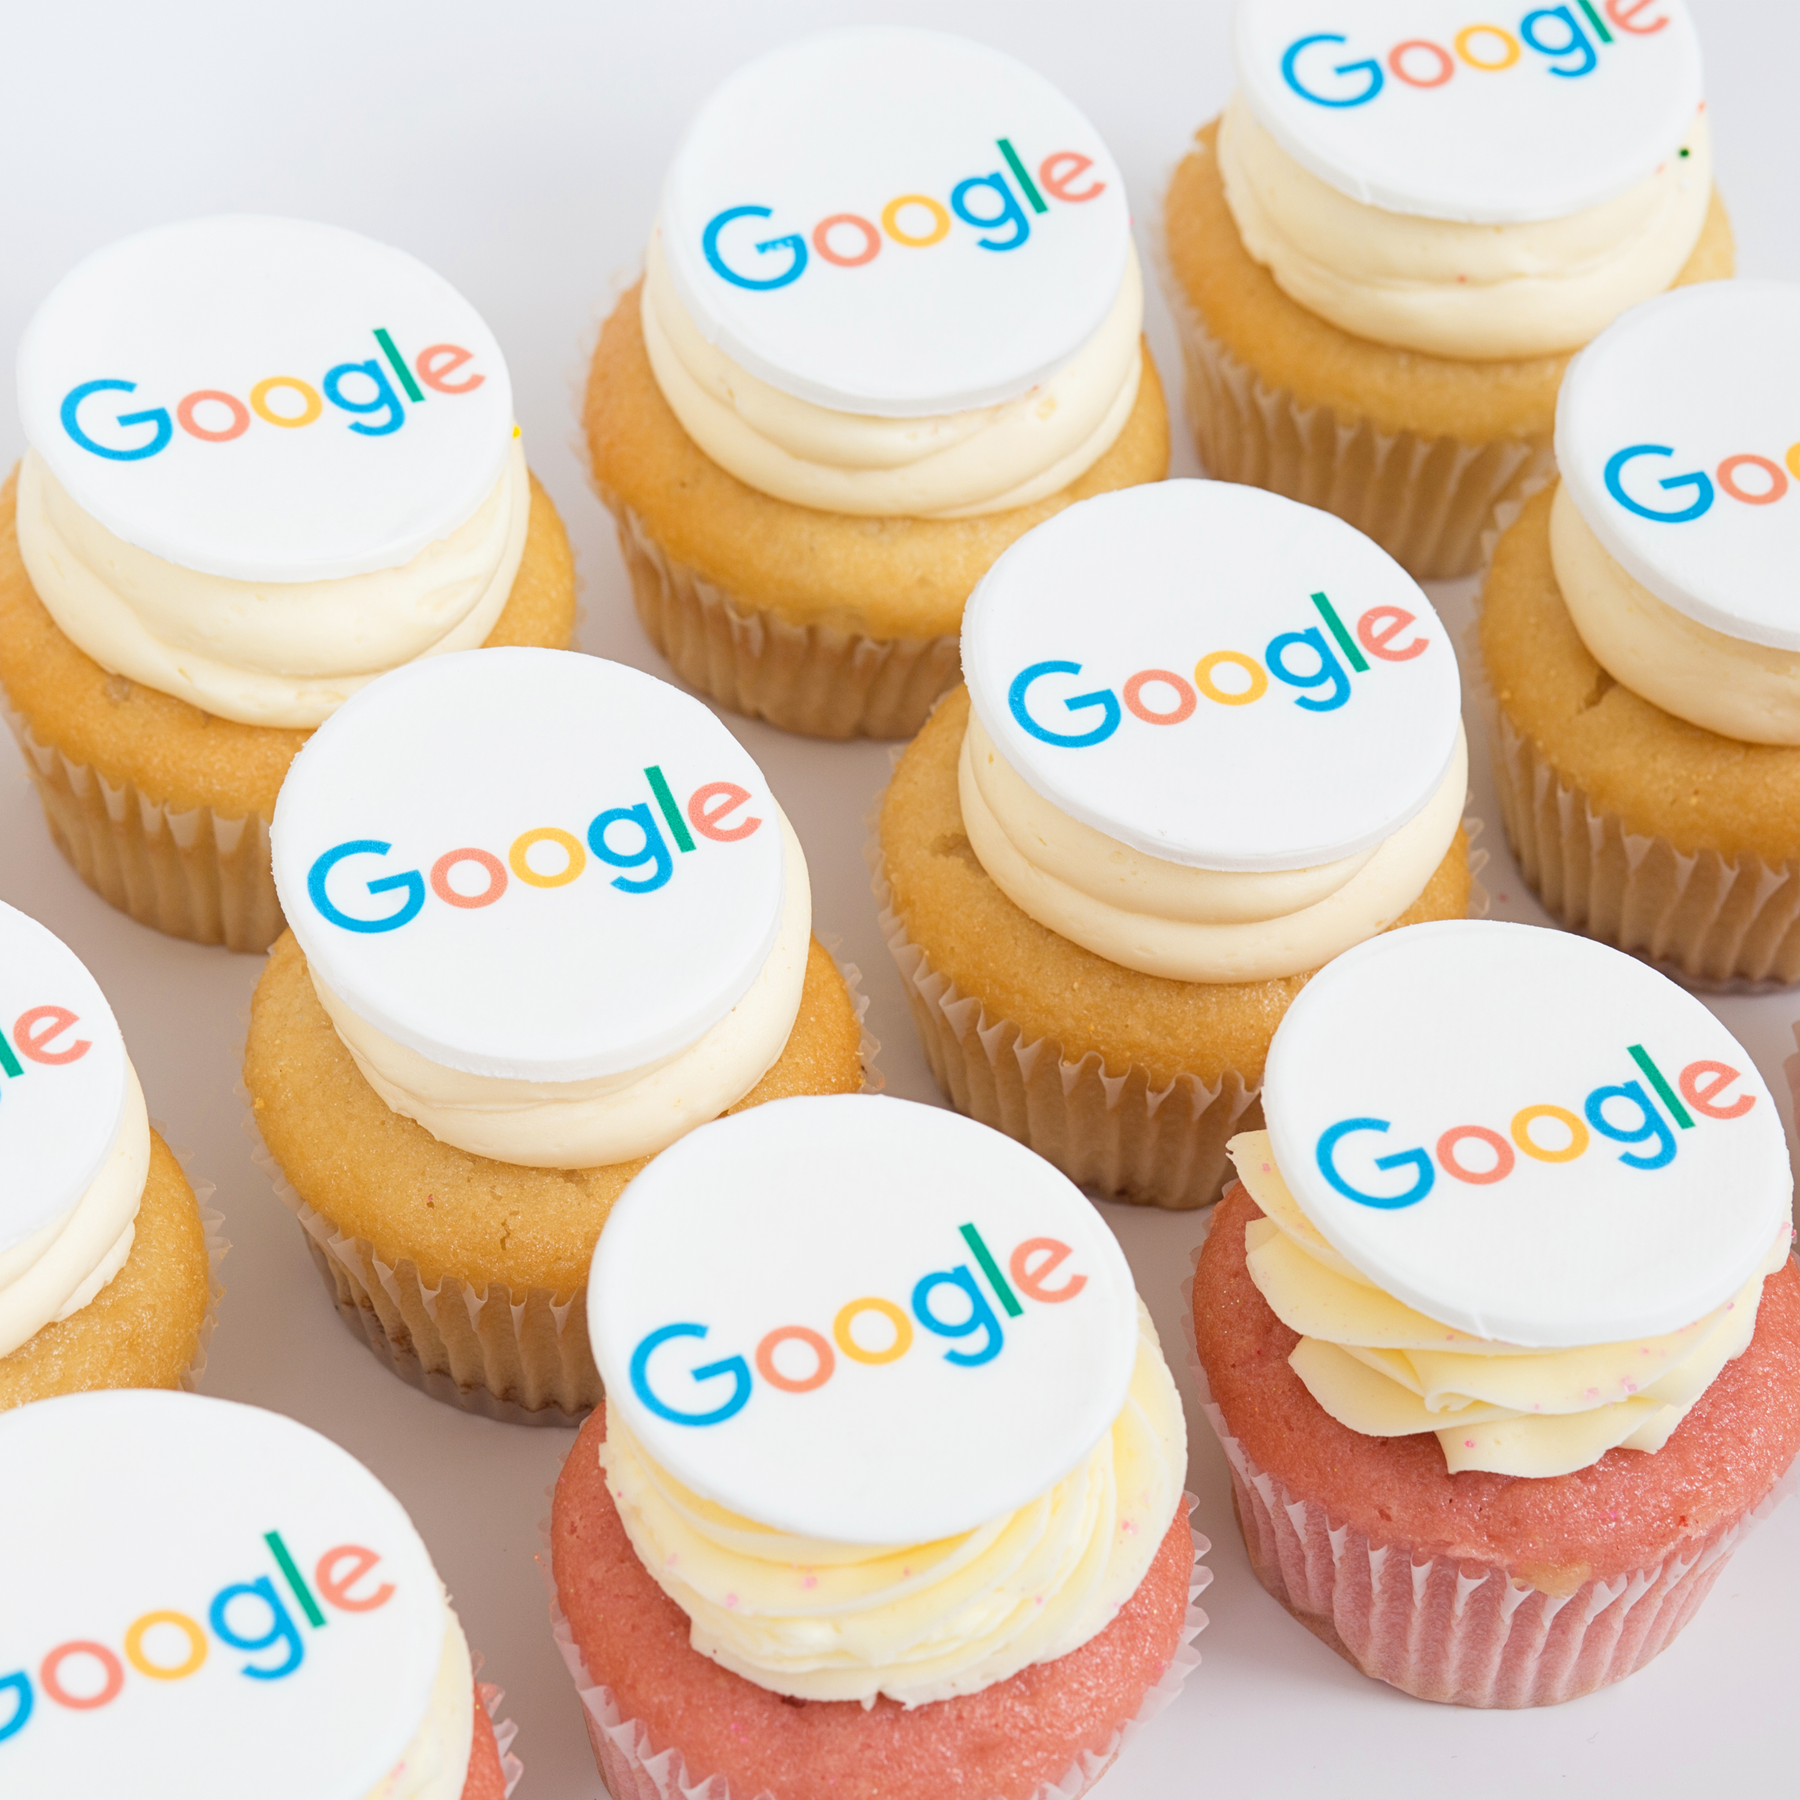 Cake Design Ideas - Apps on Google Play